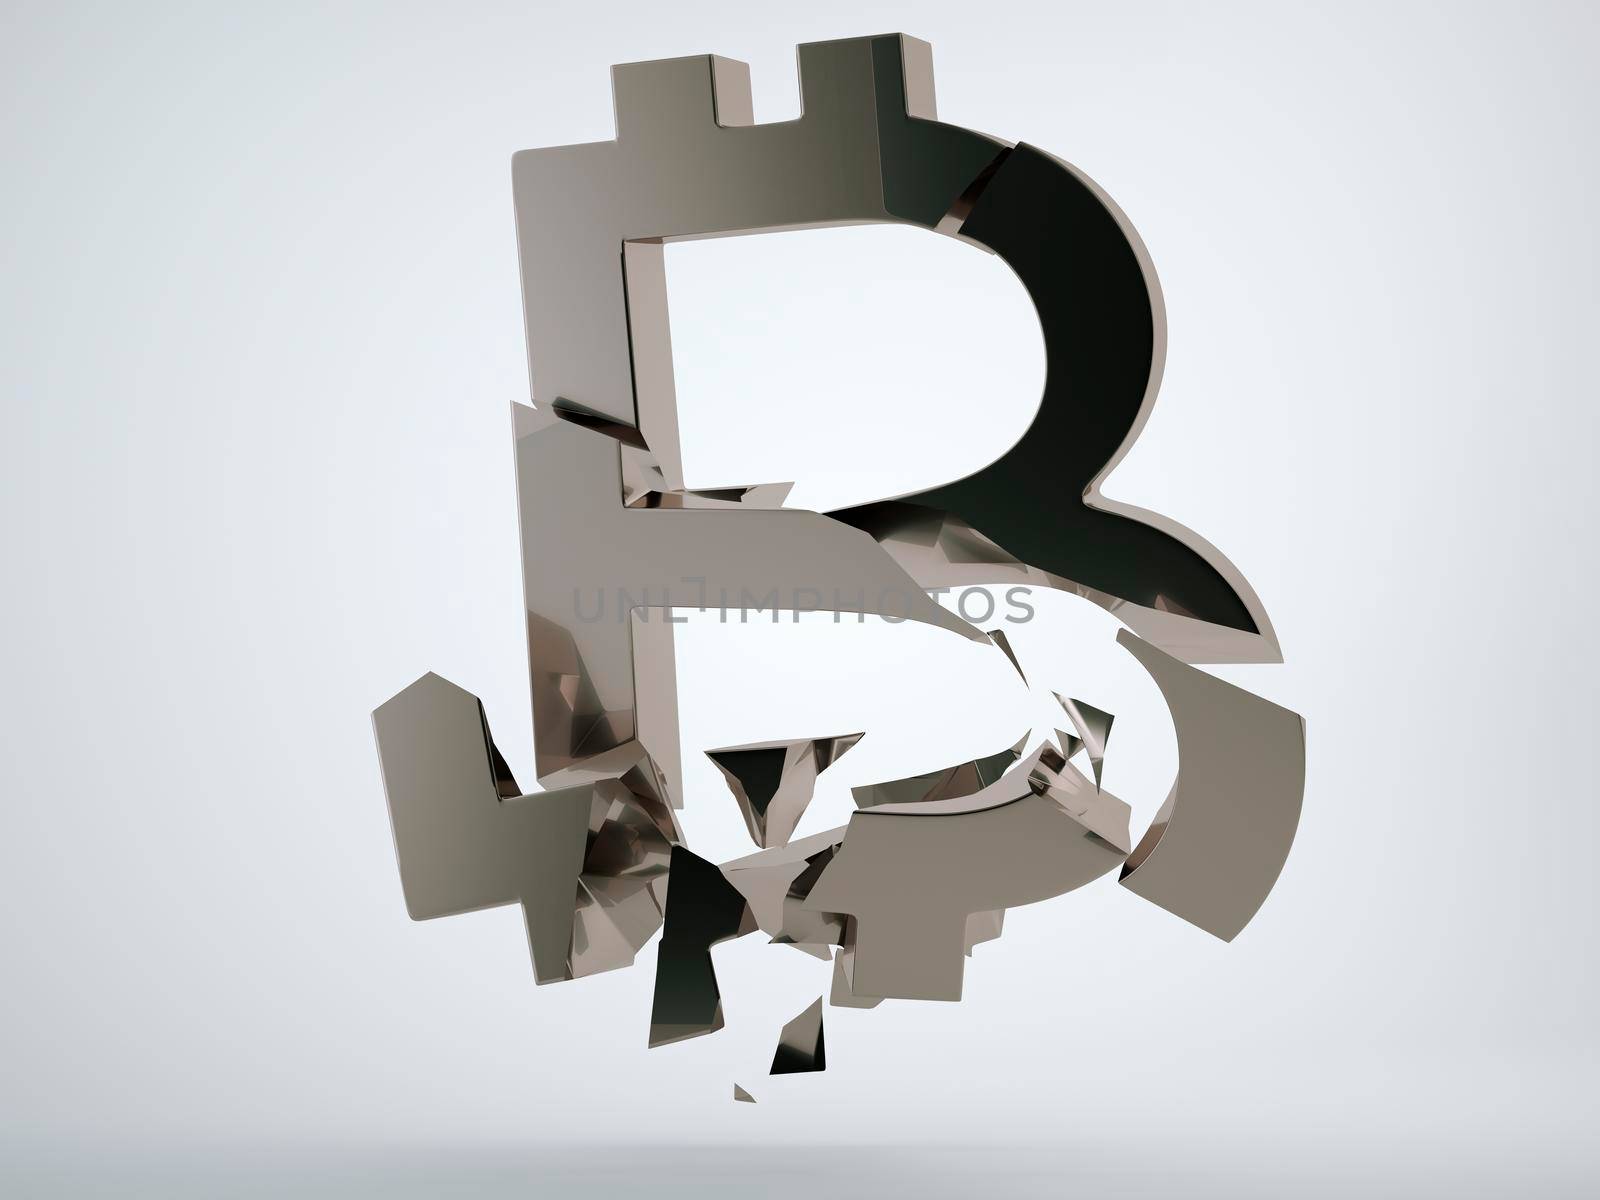 Black bitcoin symbol shattered and broken by Arsgera